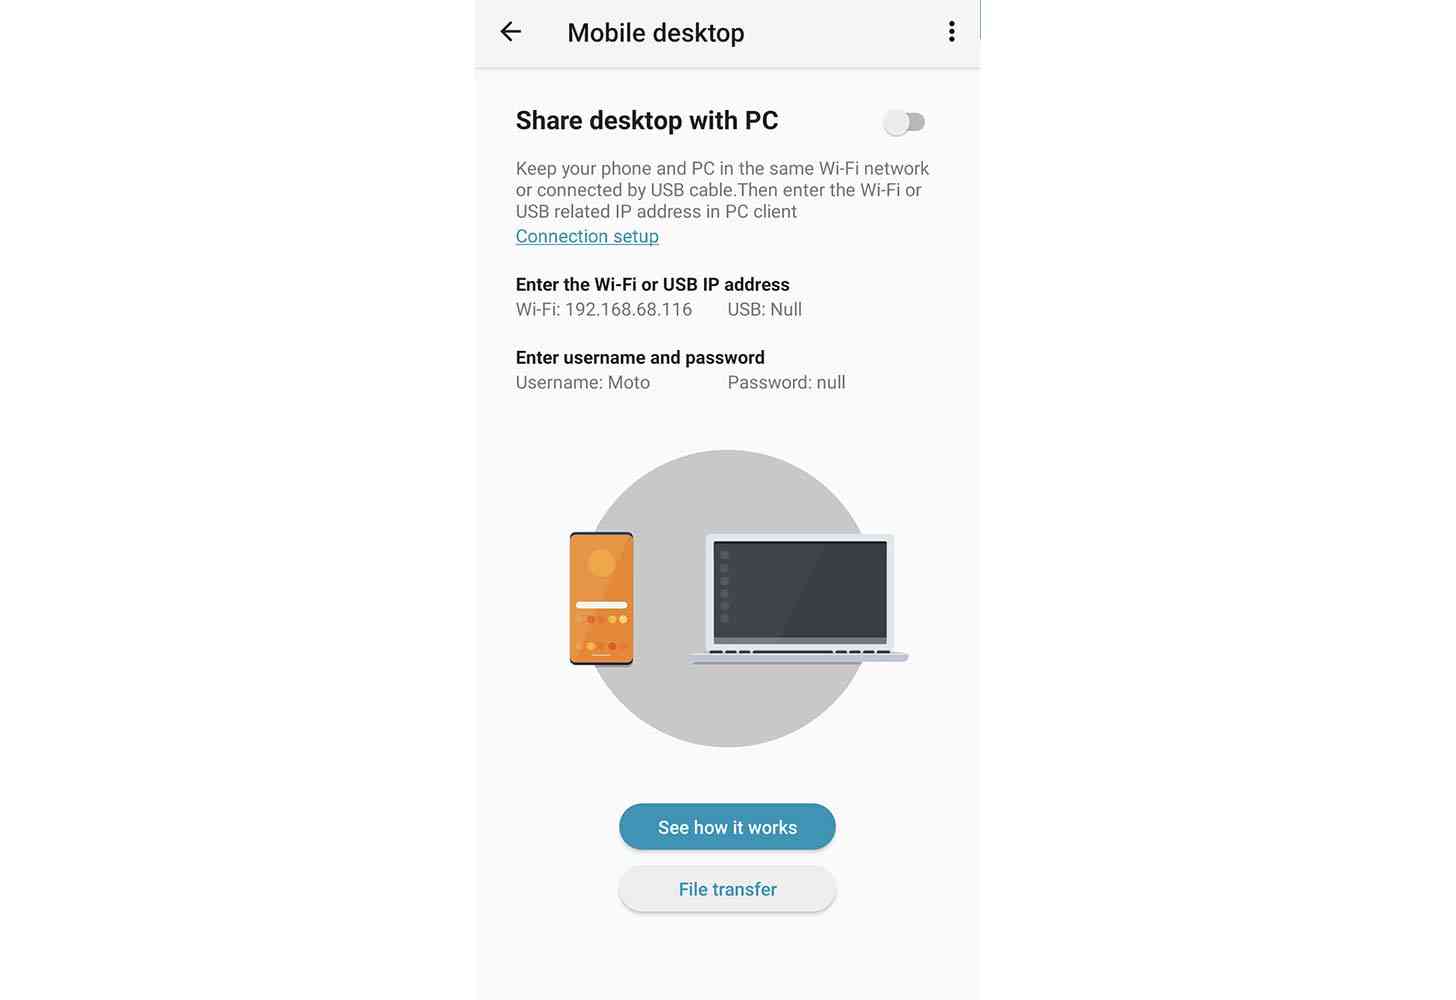 Motorola mobile desktop leak